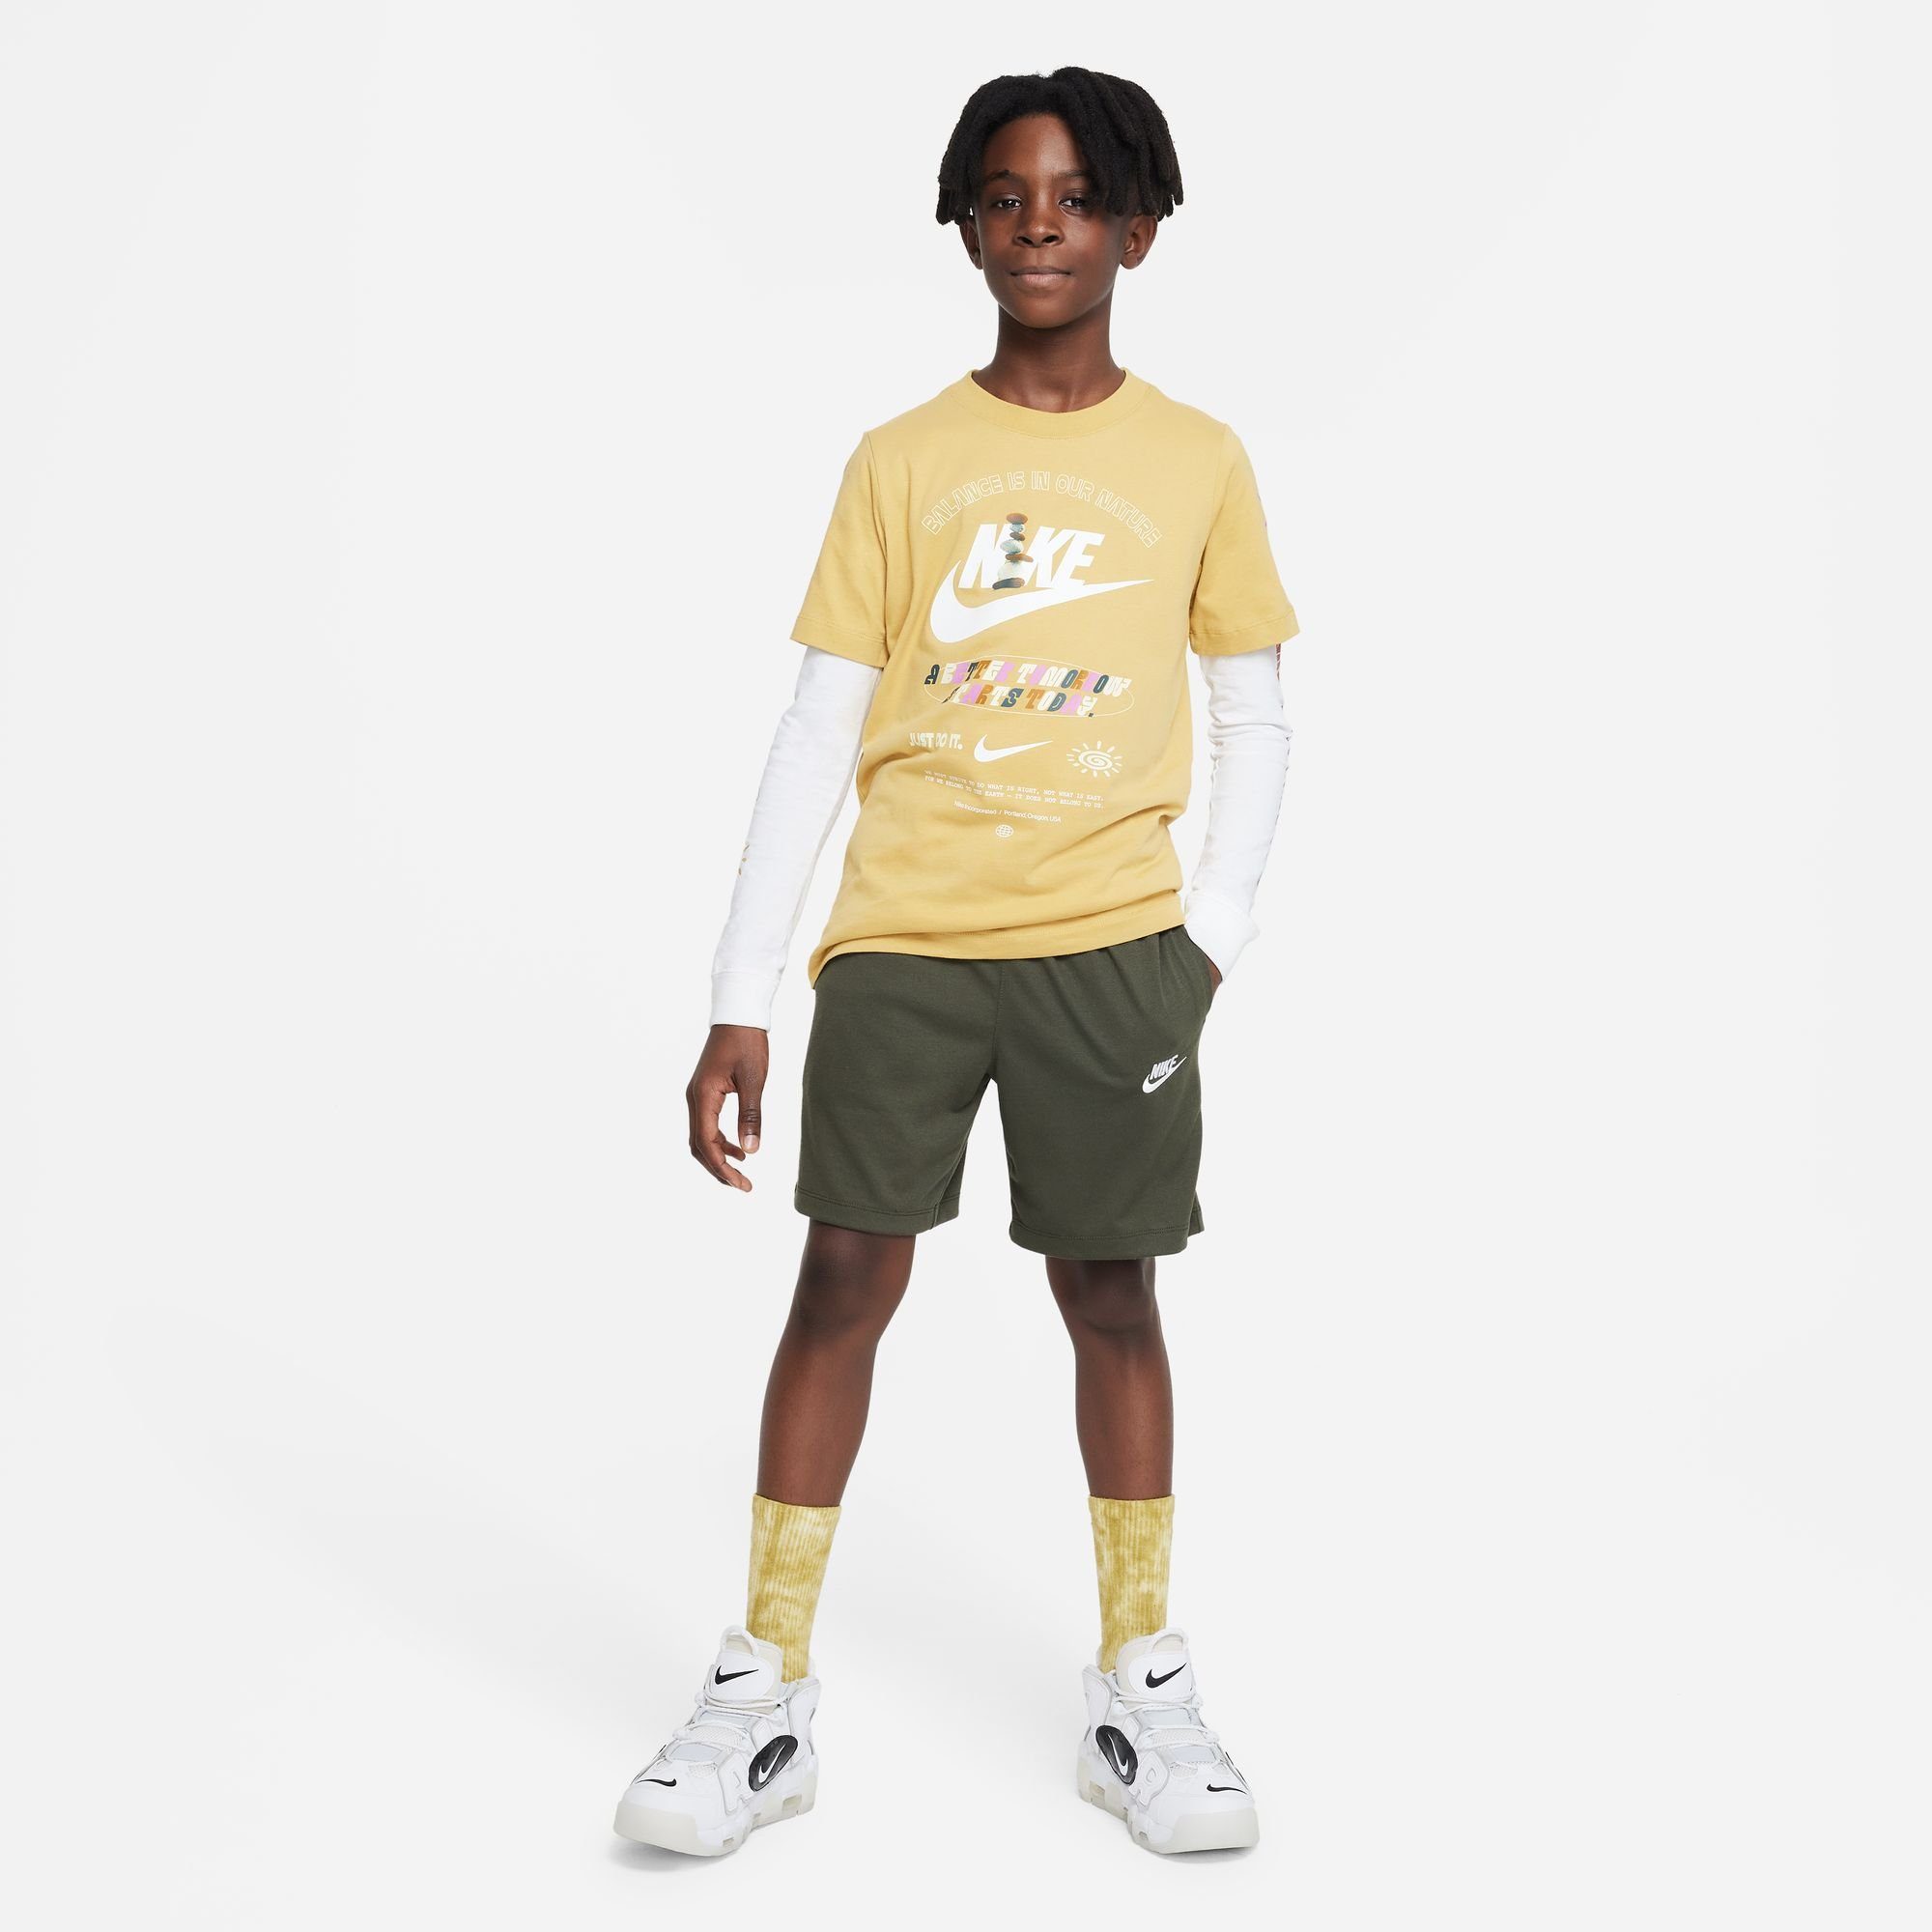 KIDS' KHAKI/WHITE CARGO Shorts (BOYS) Nike SHORTS Sportswear BIG JERSEY